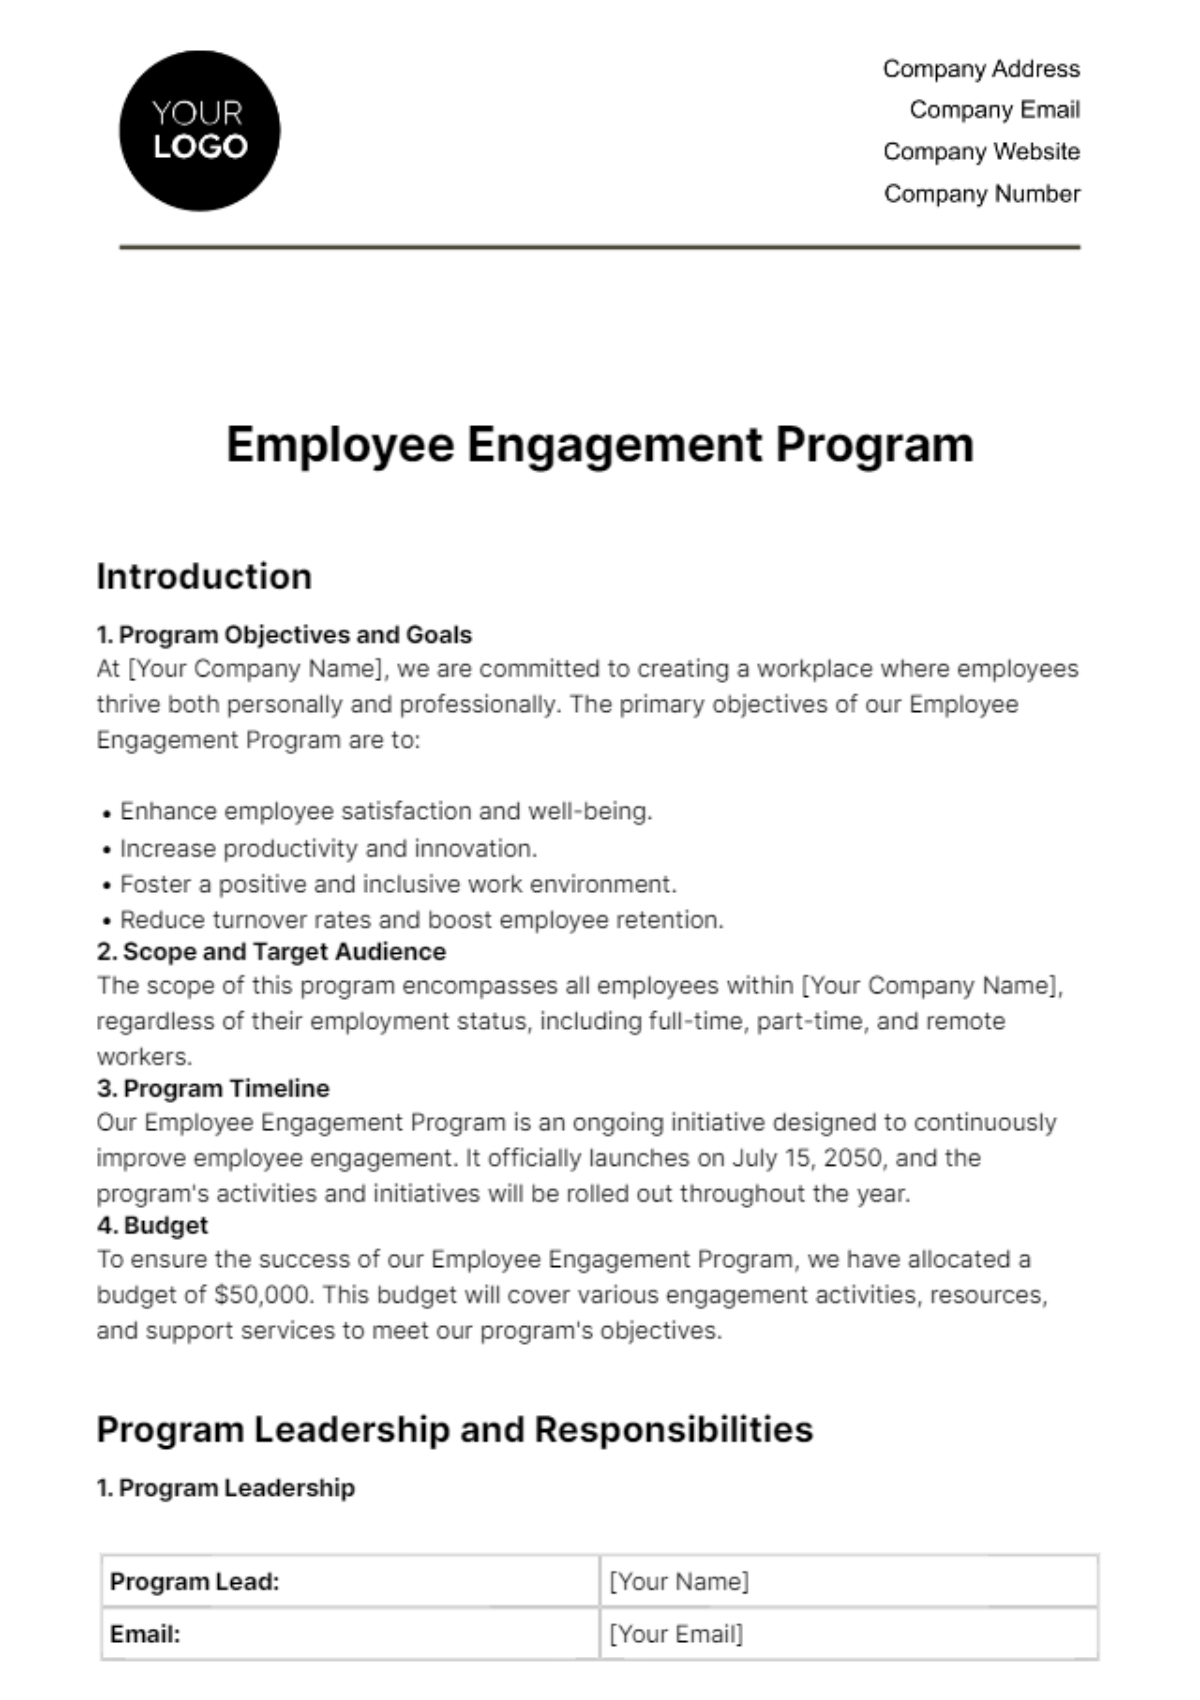 Employee Engagement Program HR Template